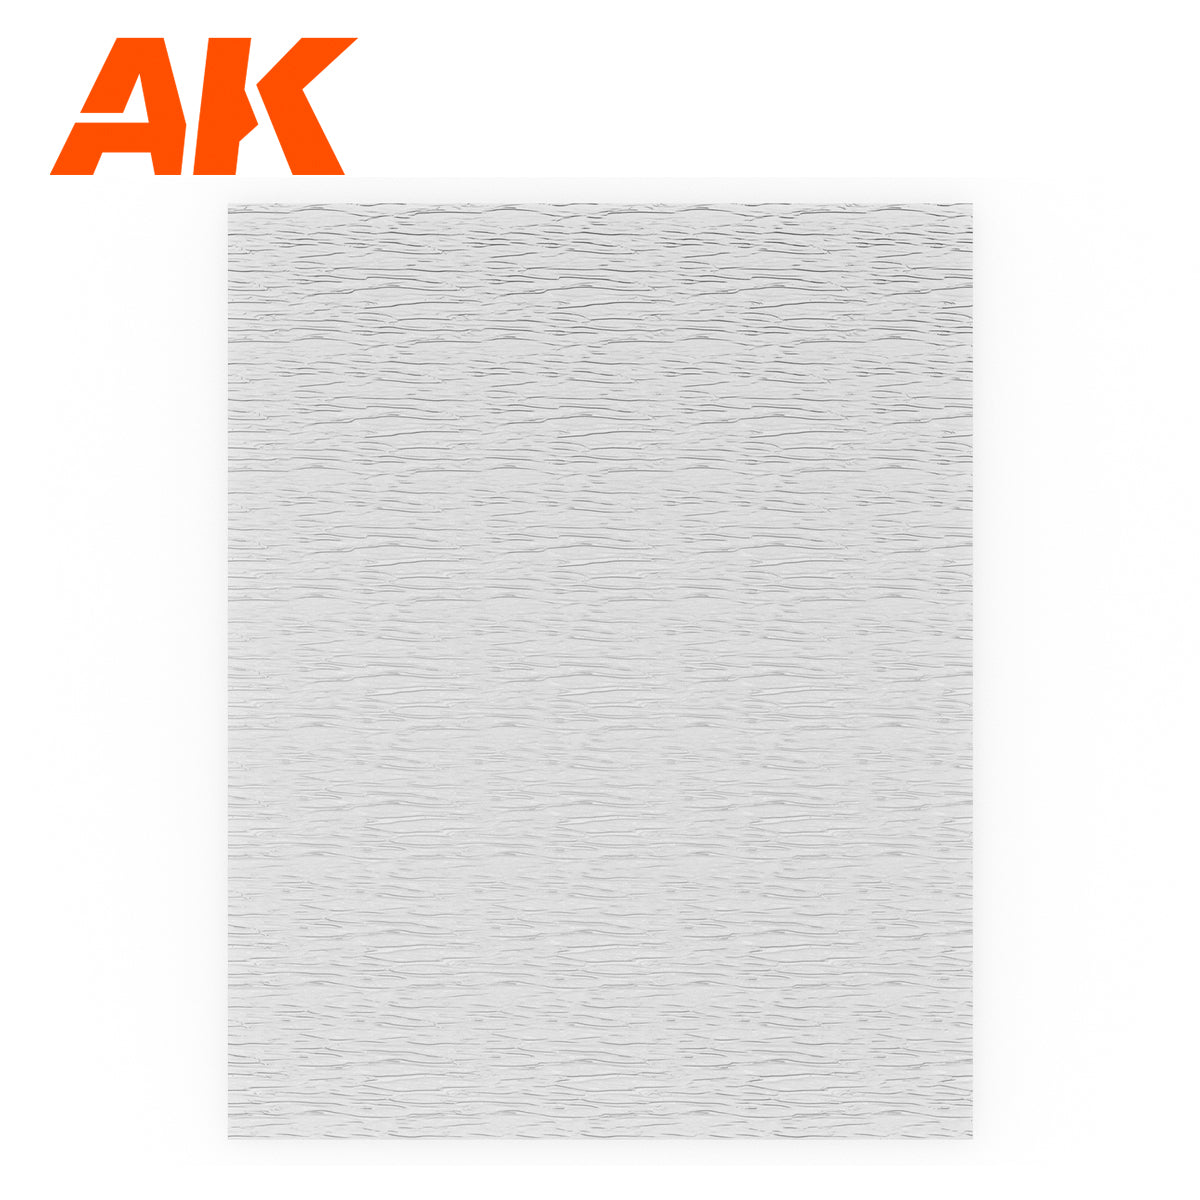 AK6584 - Water Sheet Transparent RUNNING WATER - 245 x 195mm